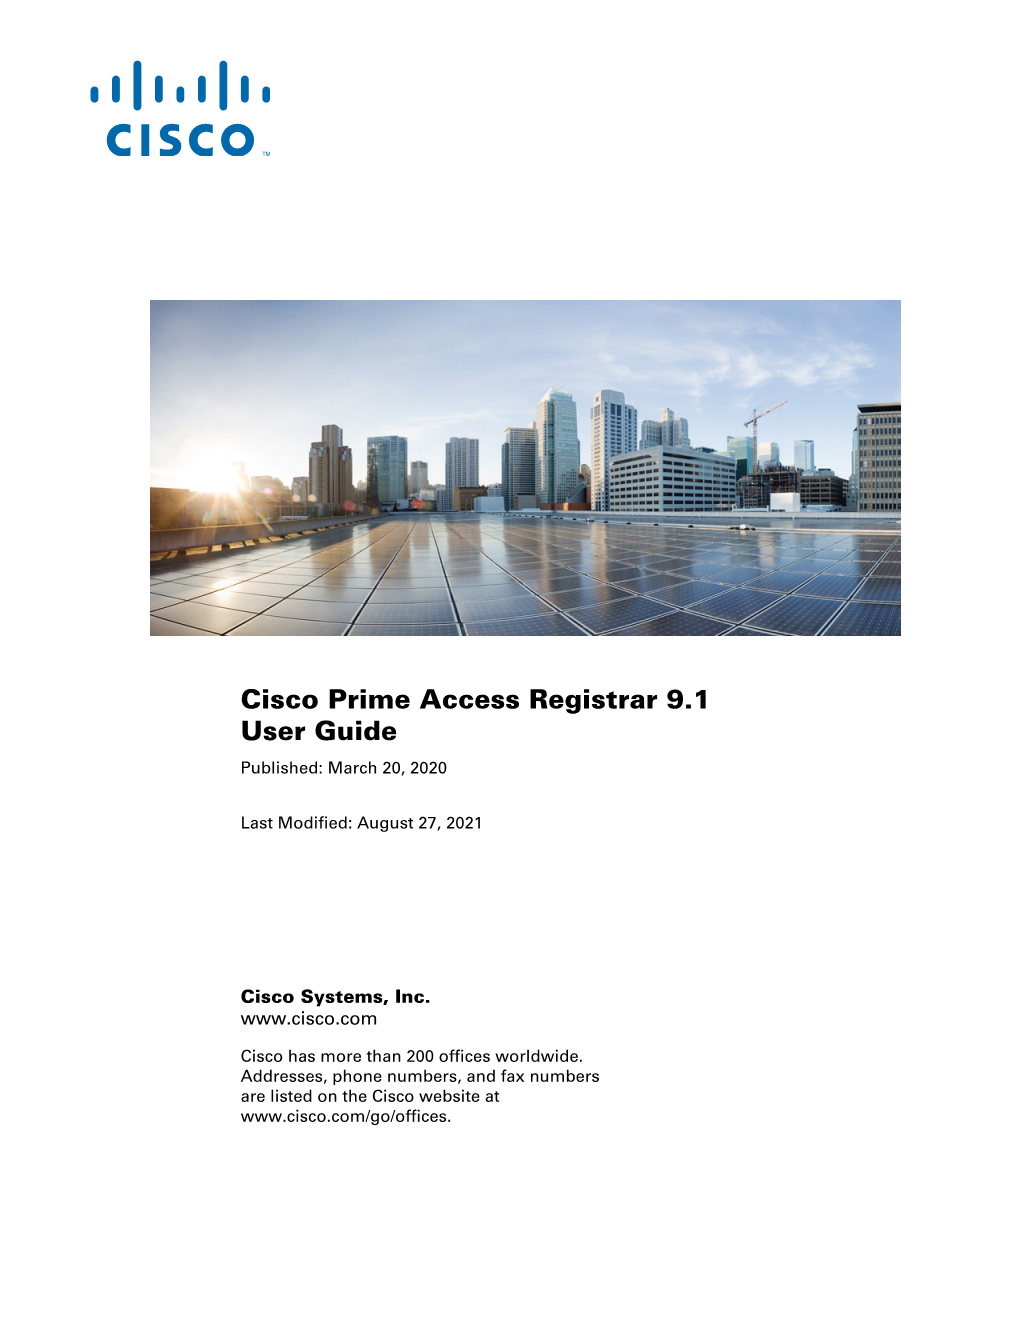 Cisco Prime Access Registrar 9.1 User Guide Published: March 20, 2020